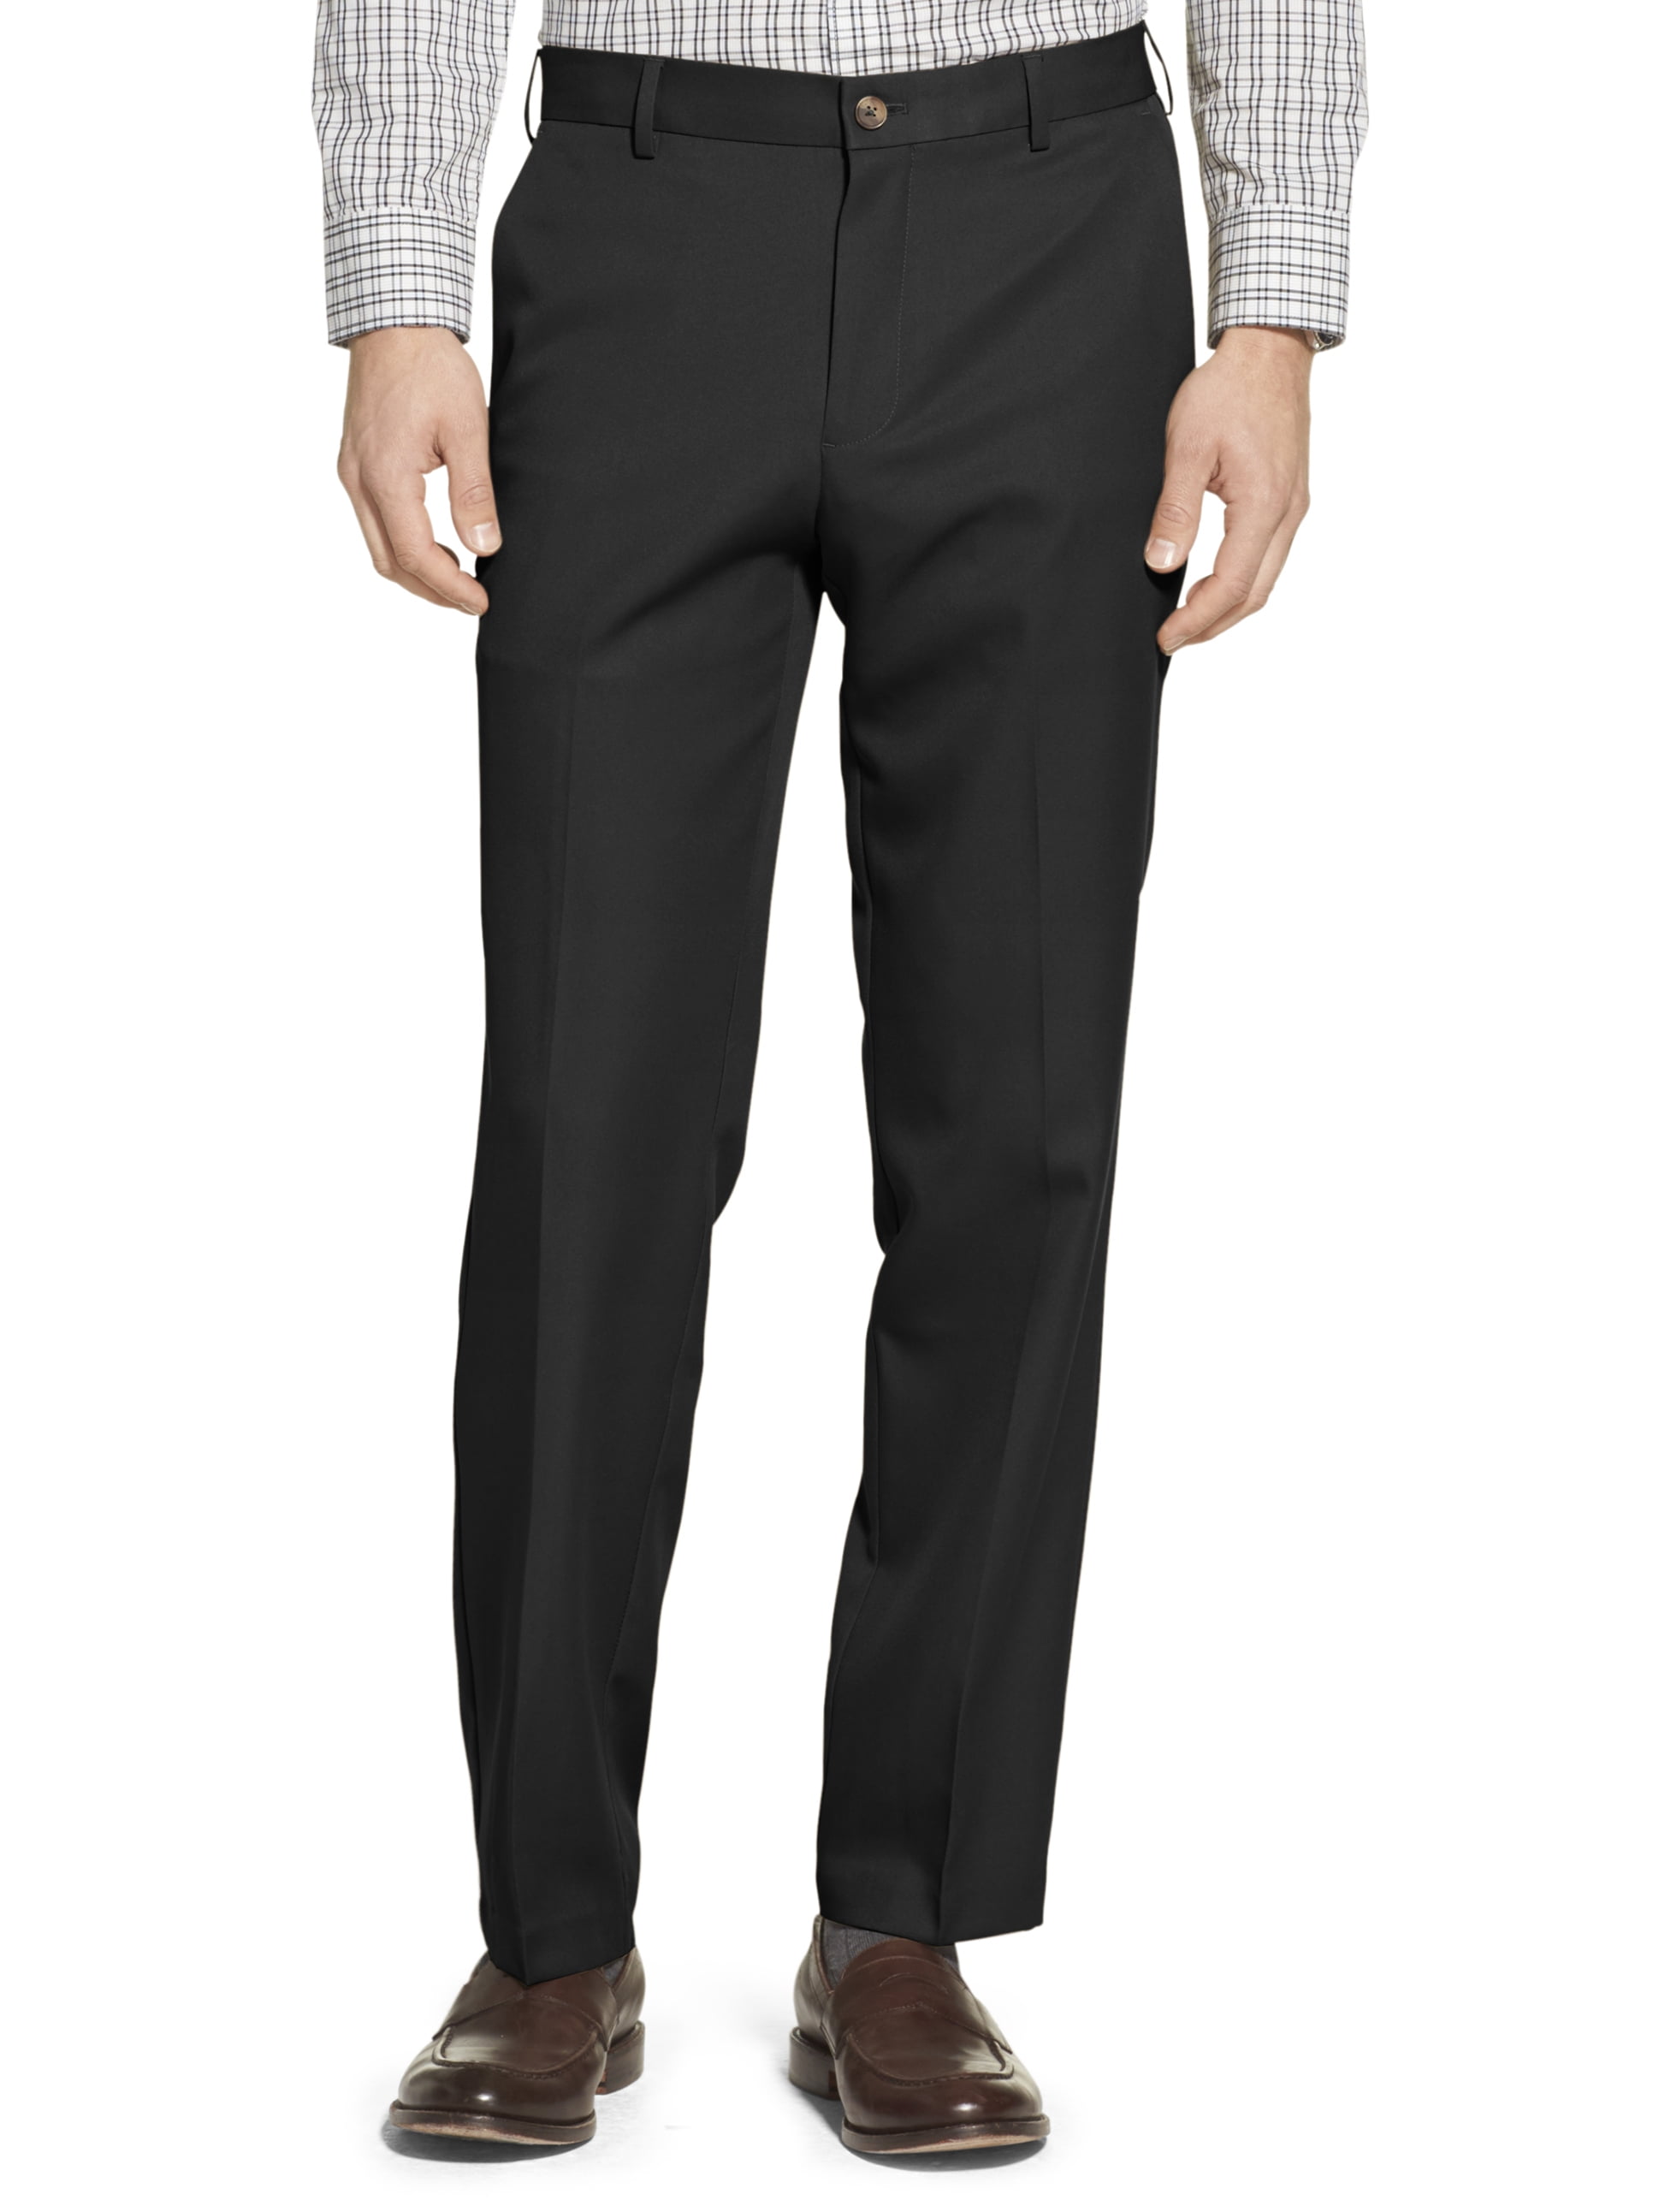 Men's Flat Front Straight Fit Dress Pant - Walmart.com